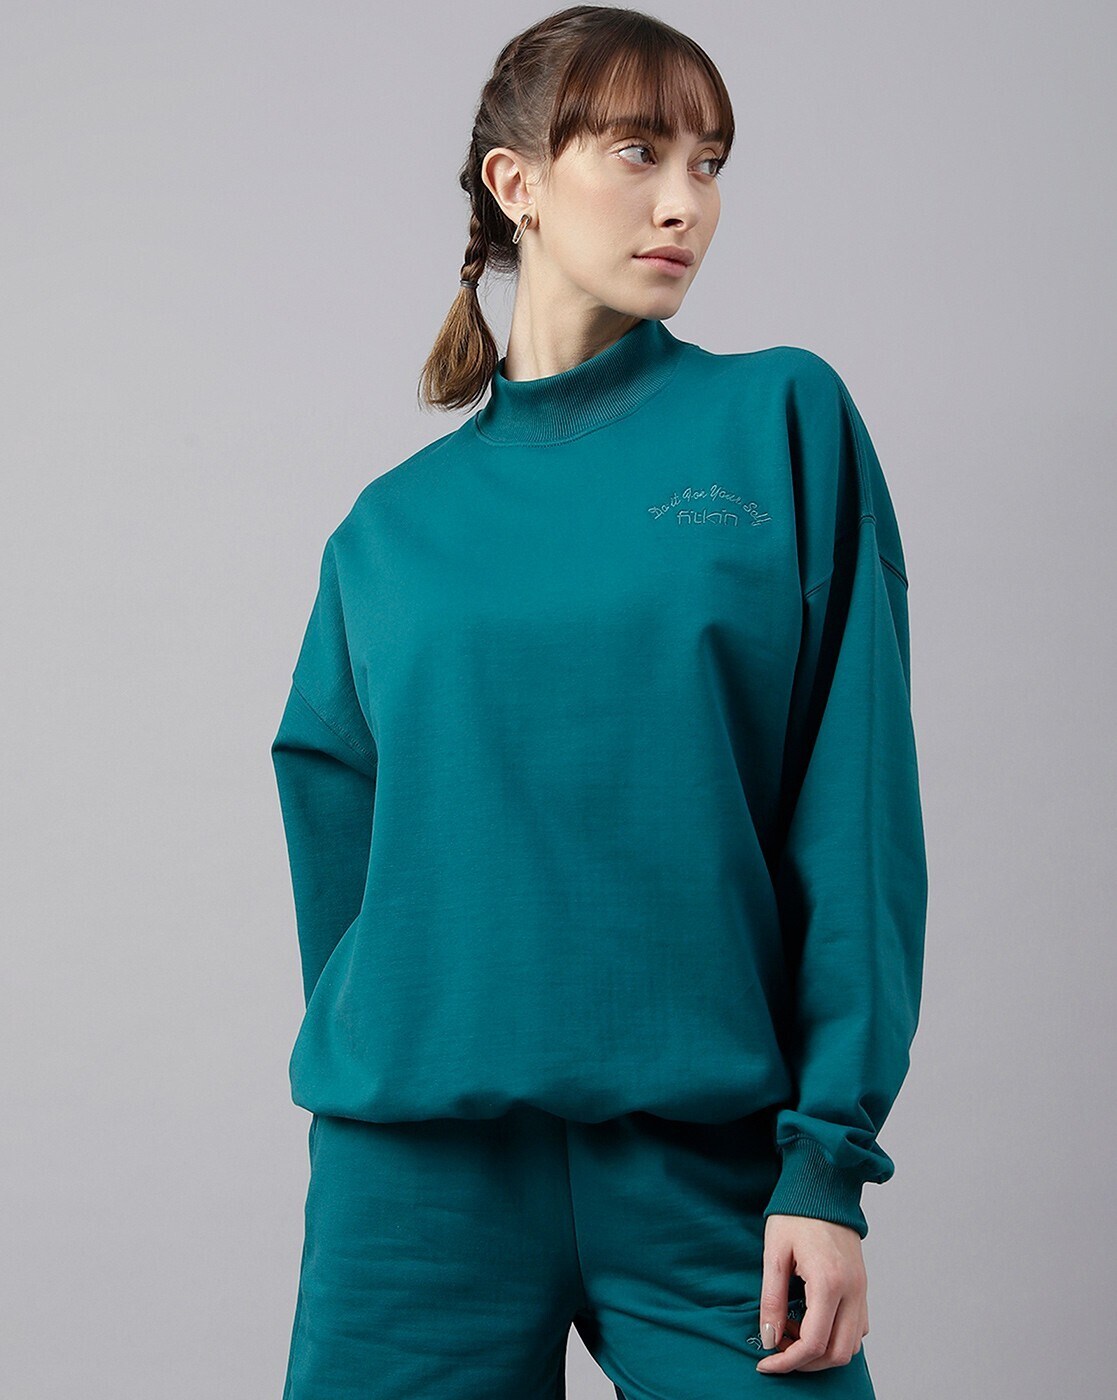 Fitkin Sweatshirts - Buy Fitkin Sweatshirts online in India